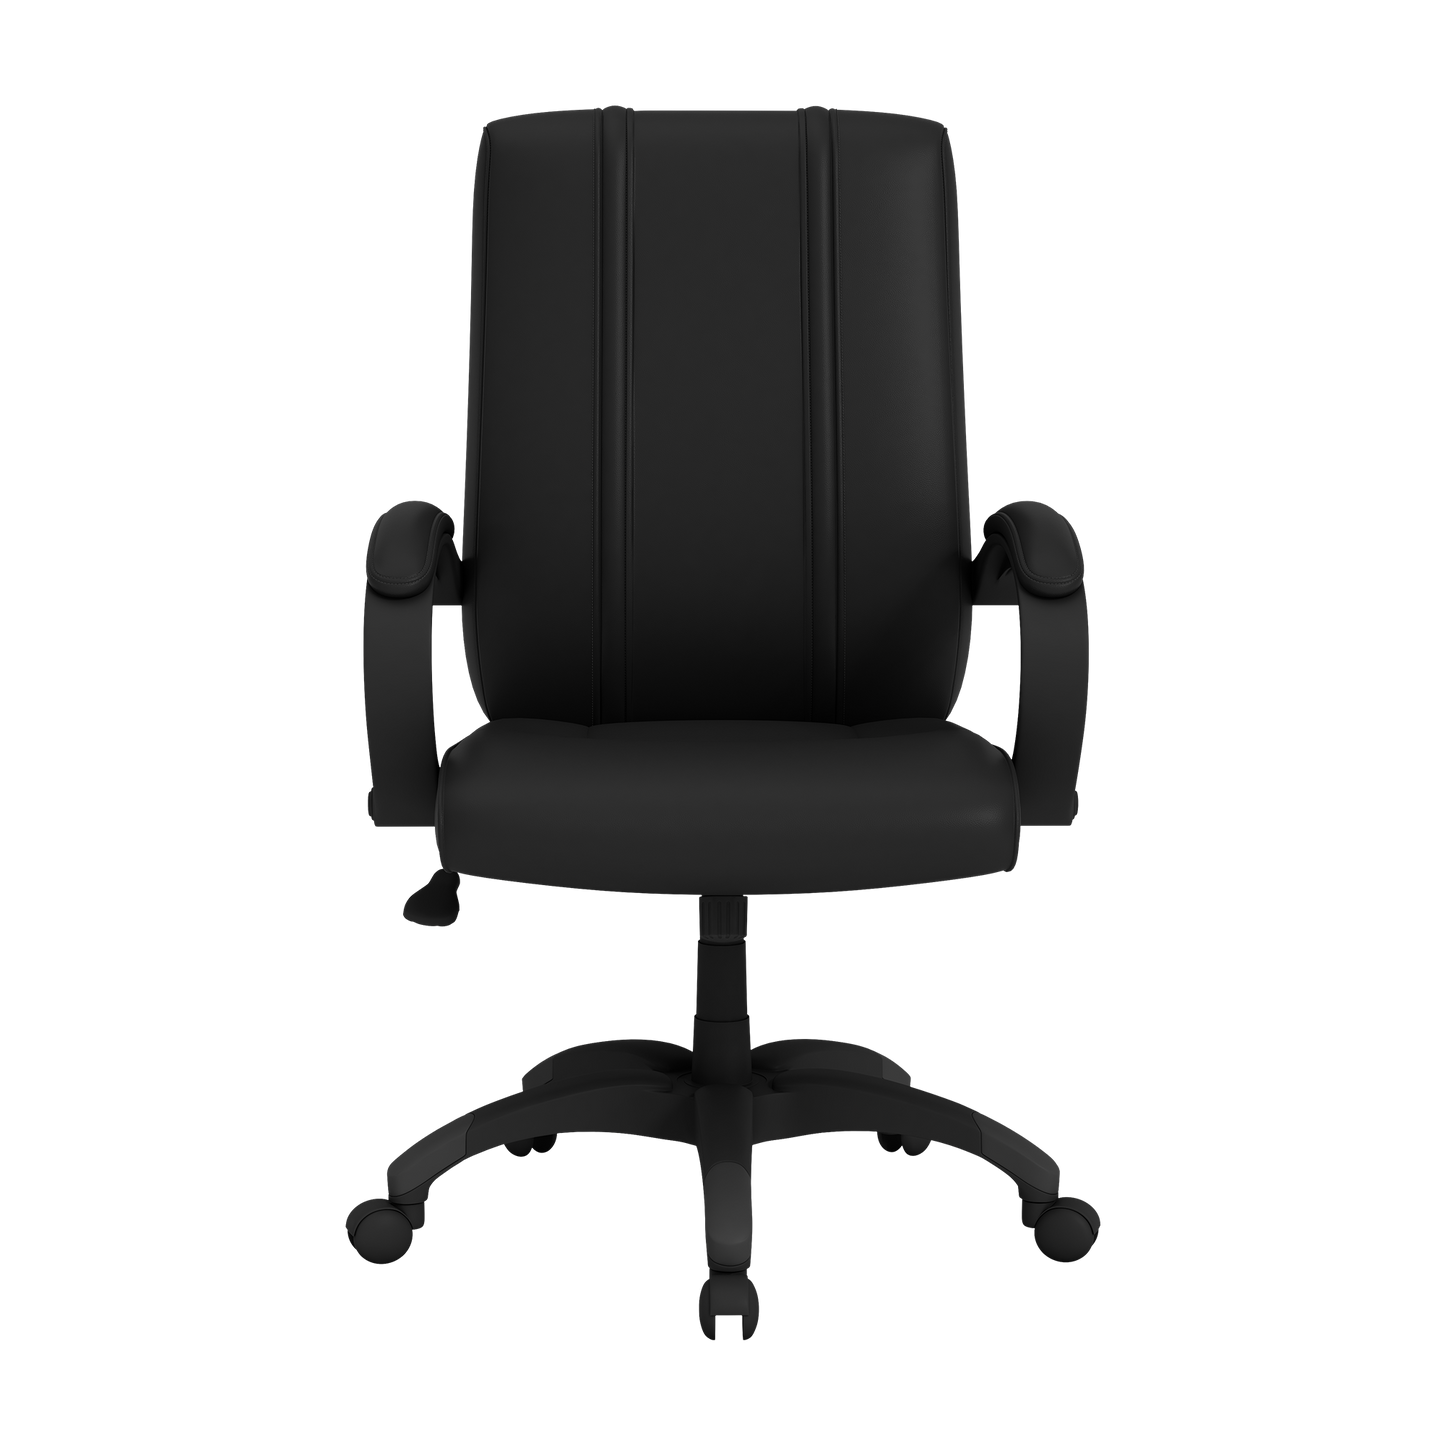 Office Chair 1000 with Carolina Hurricanes Logo